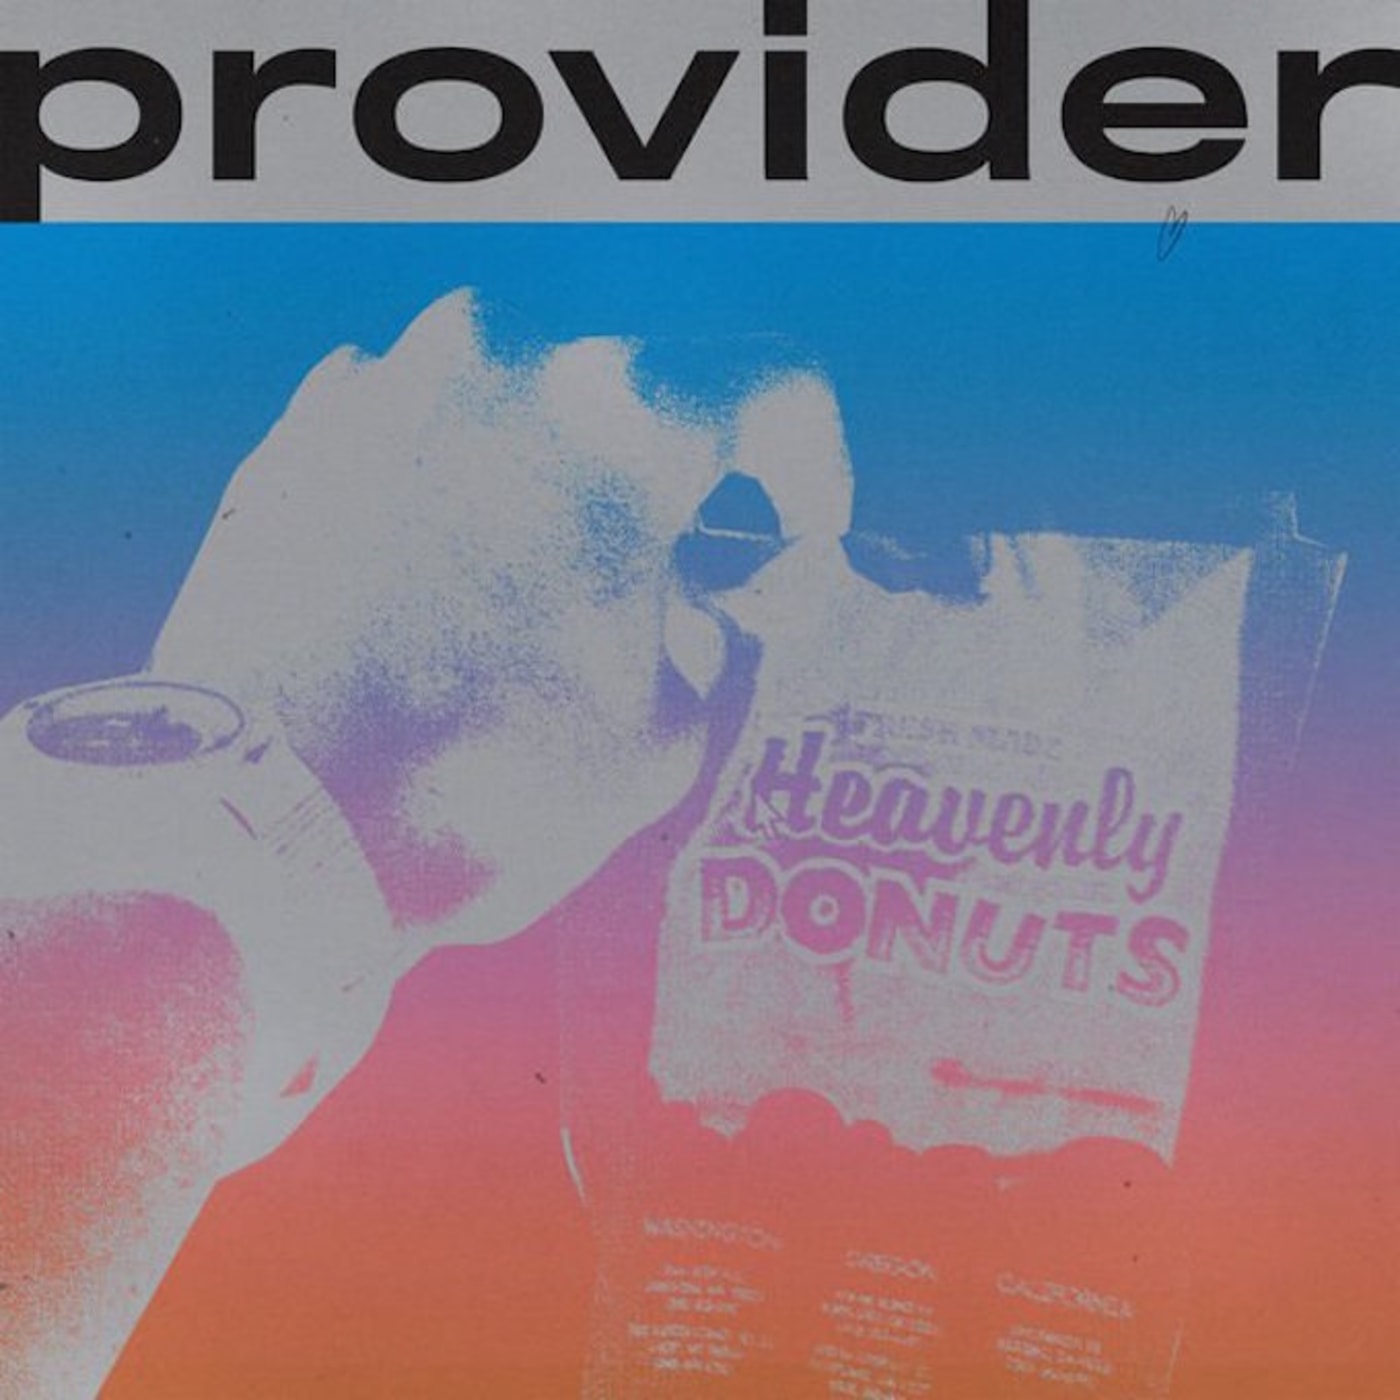 Frank Ocean 'Provider' album cover.